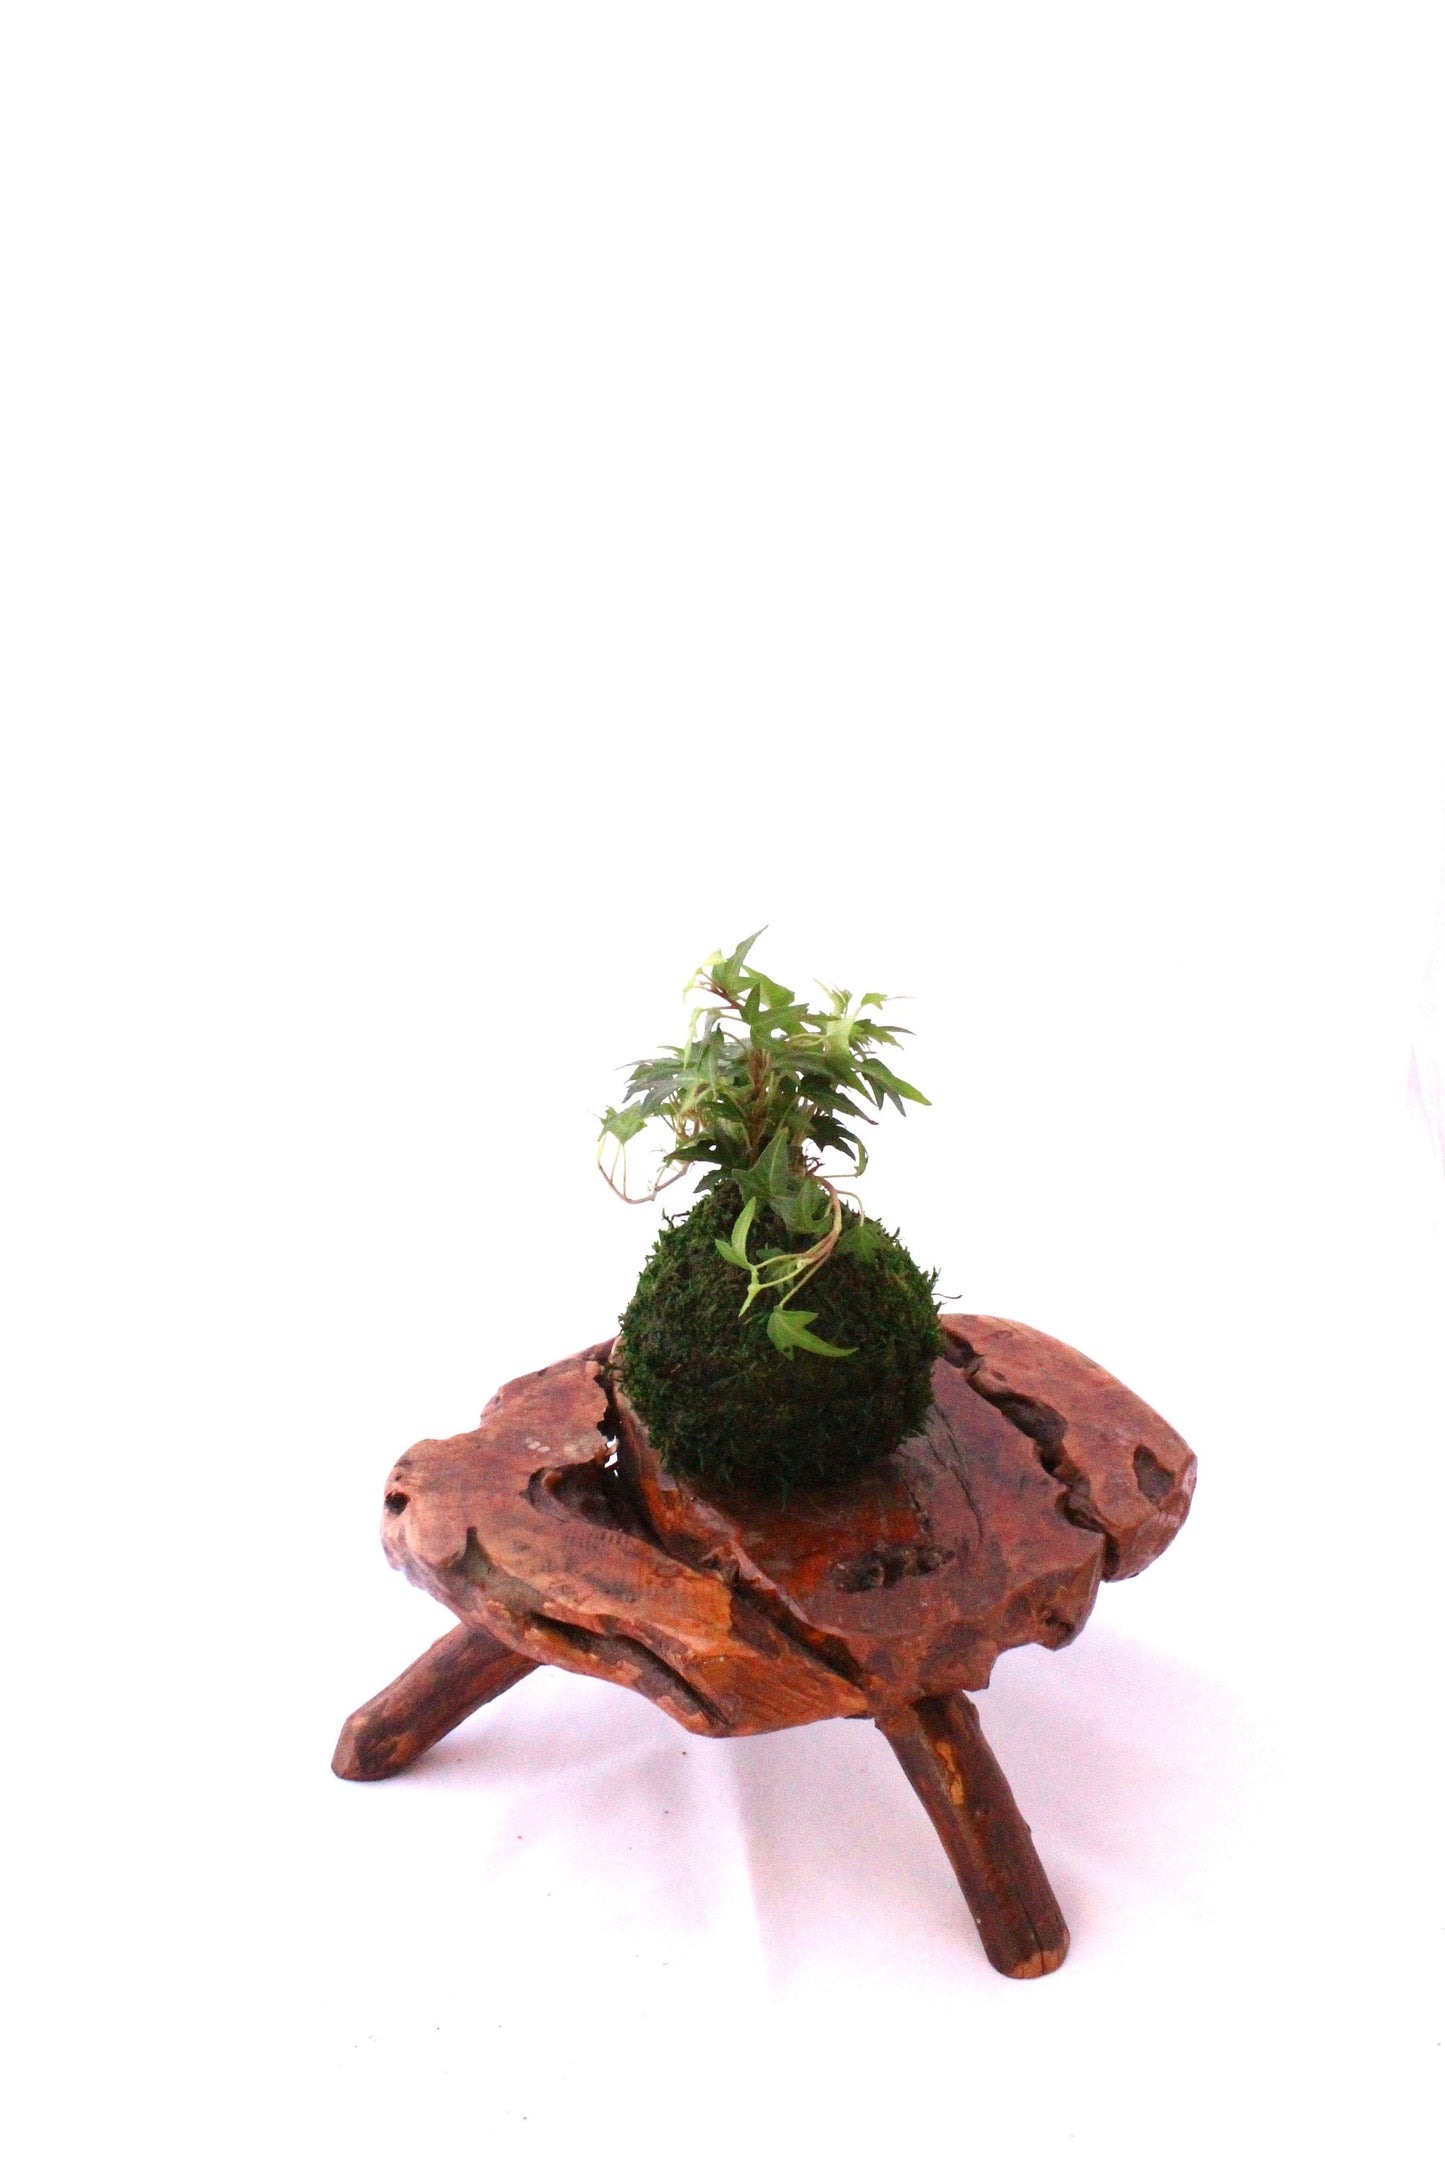 Mini Ivy Kokedama - Japanese botanical art, moss-ball with live ivy plant.